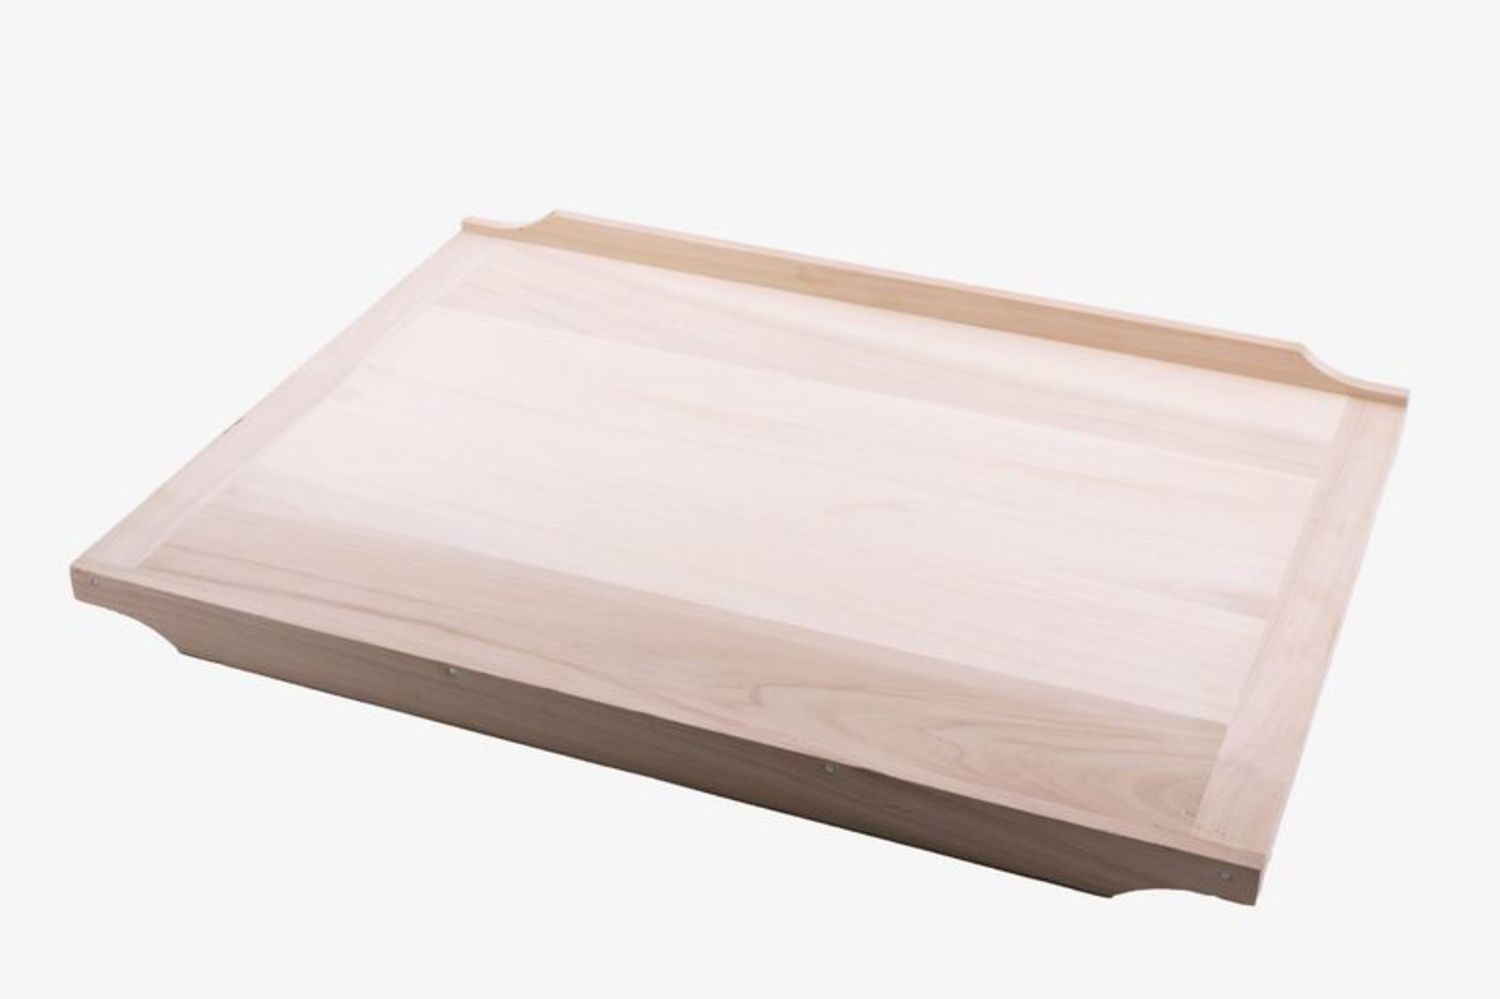 A wooden cutting board photo 1